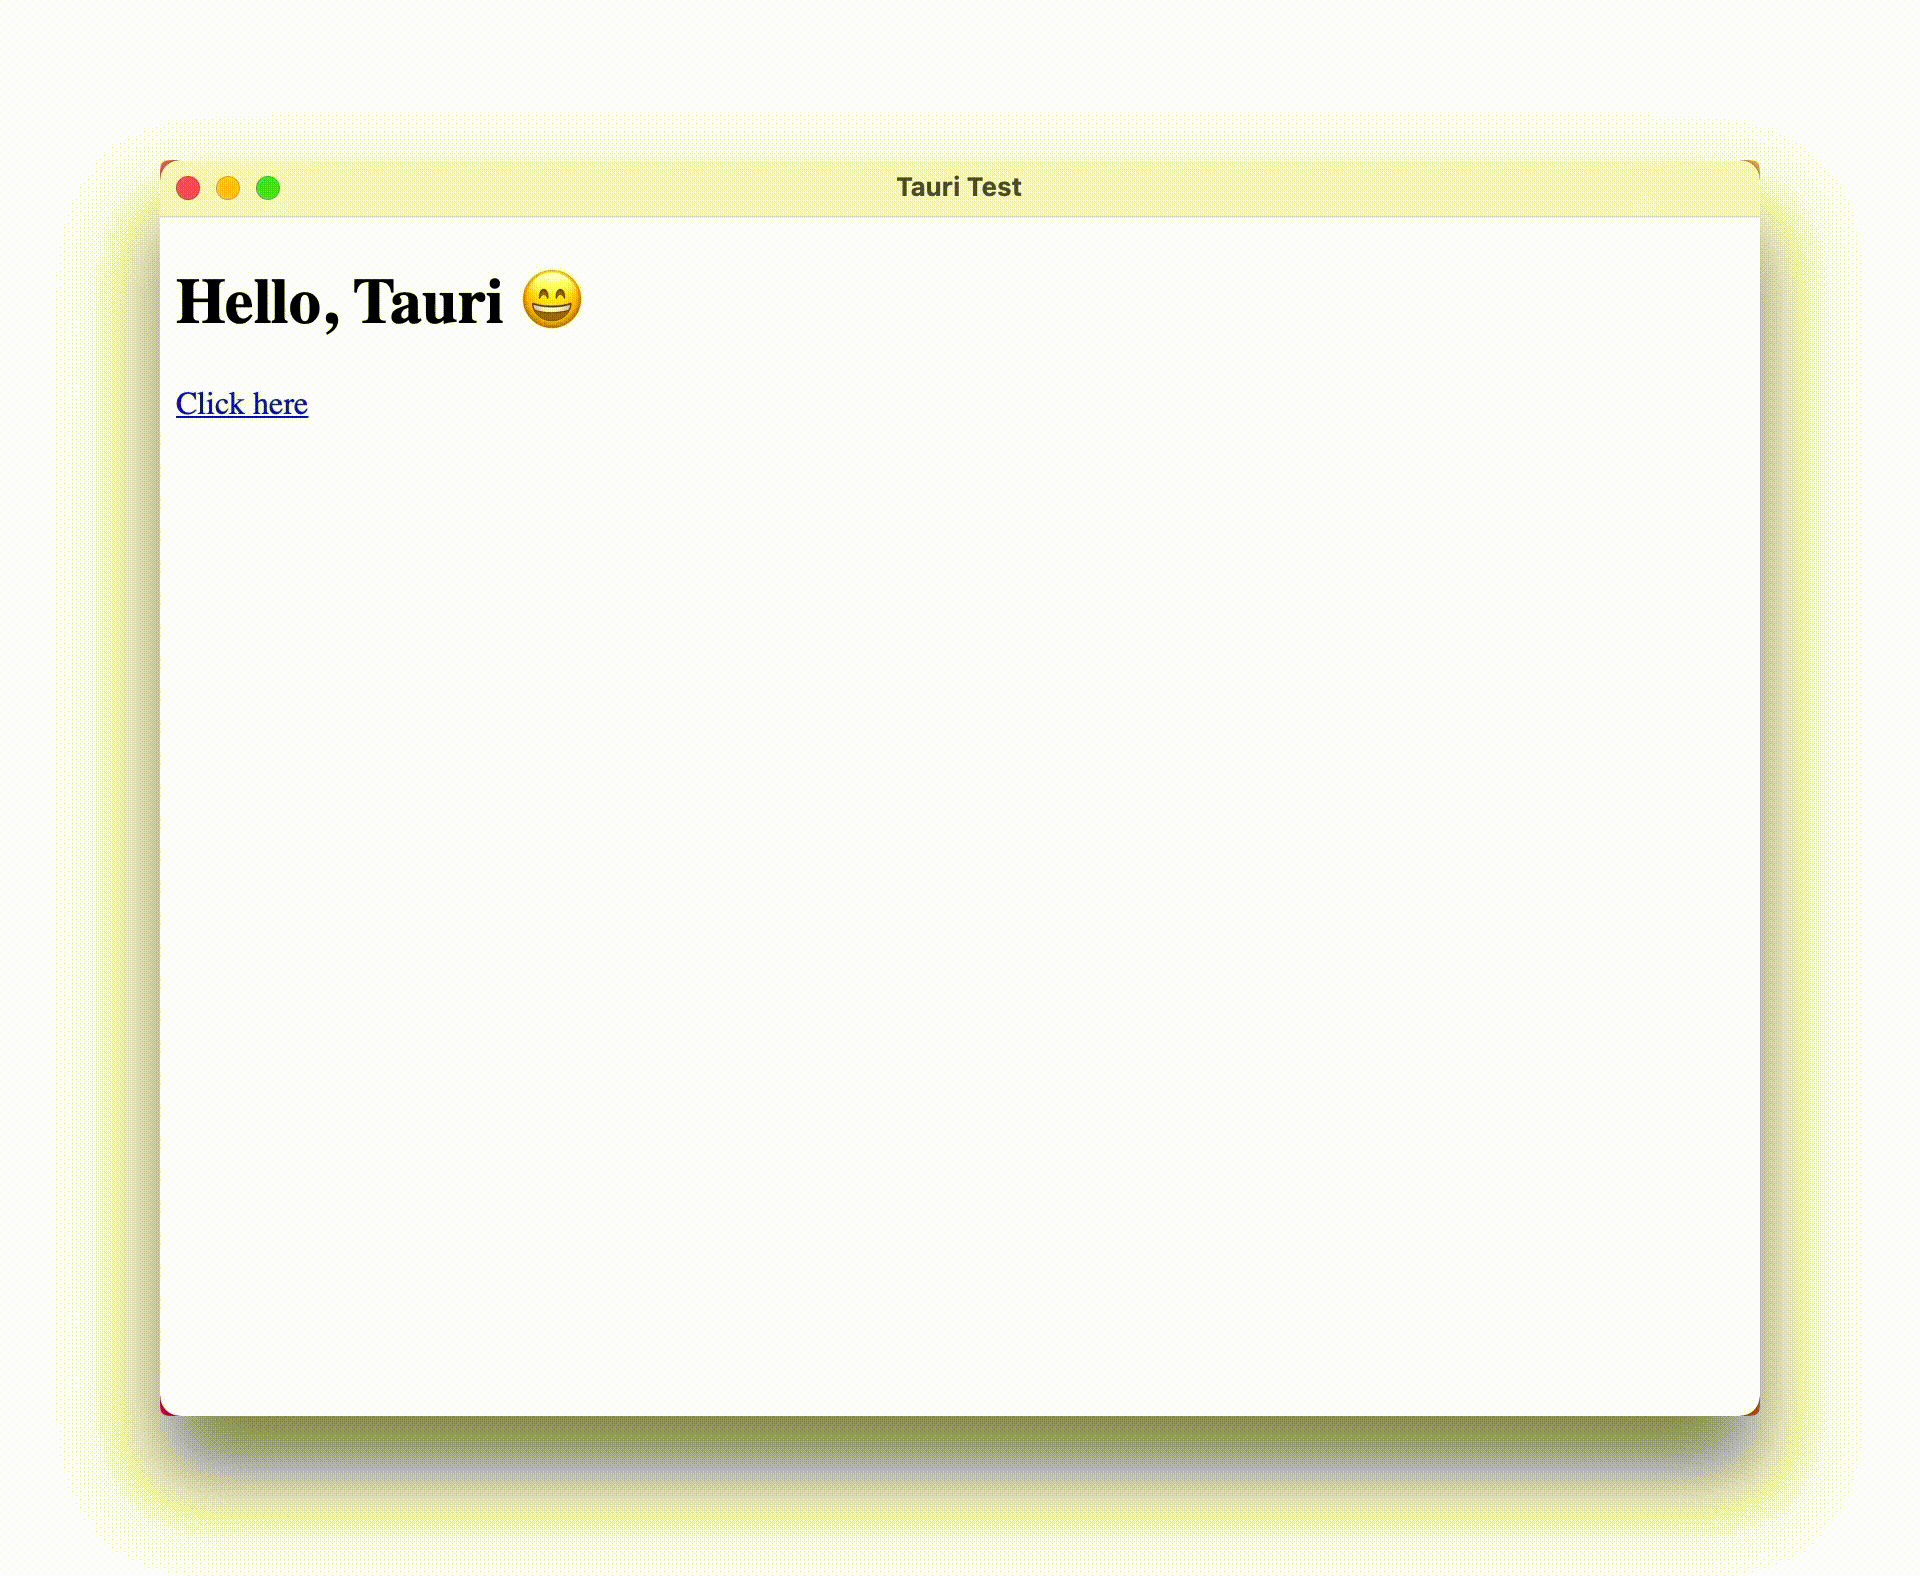 Tauri running the Ember.js app in MacOS